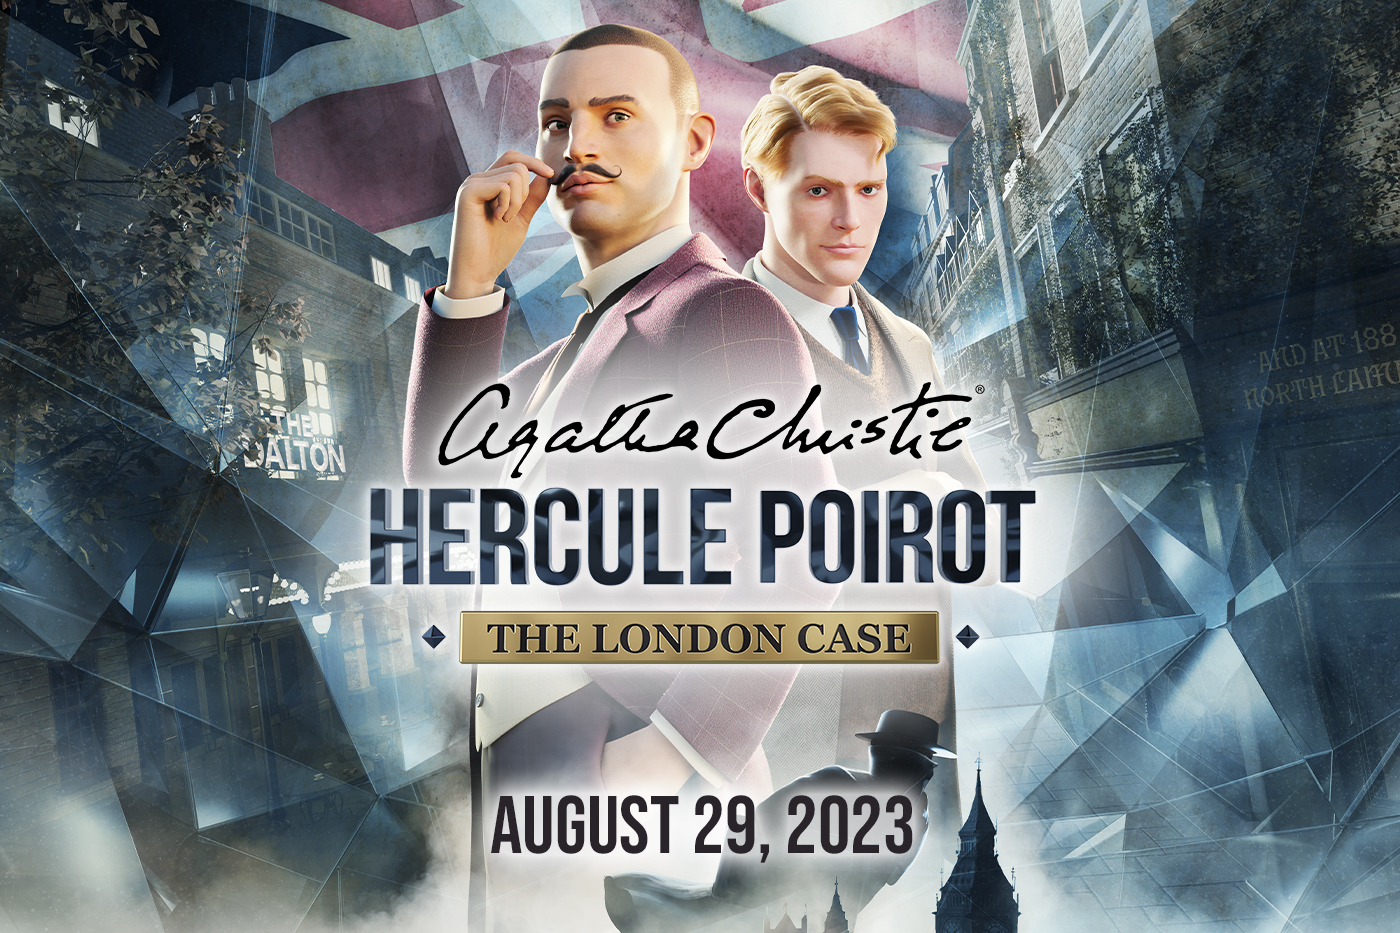 Hercule Poirot: The London Case - Agatha Christie (UK)